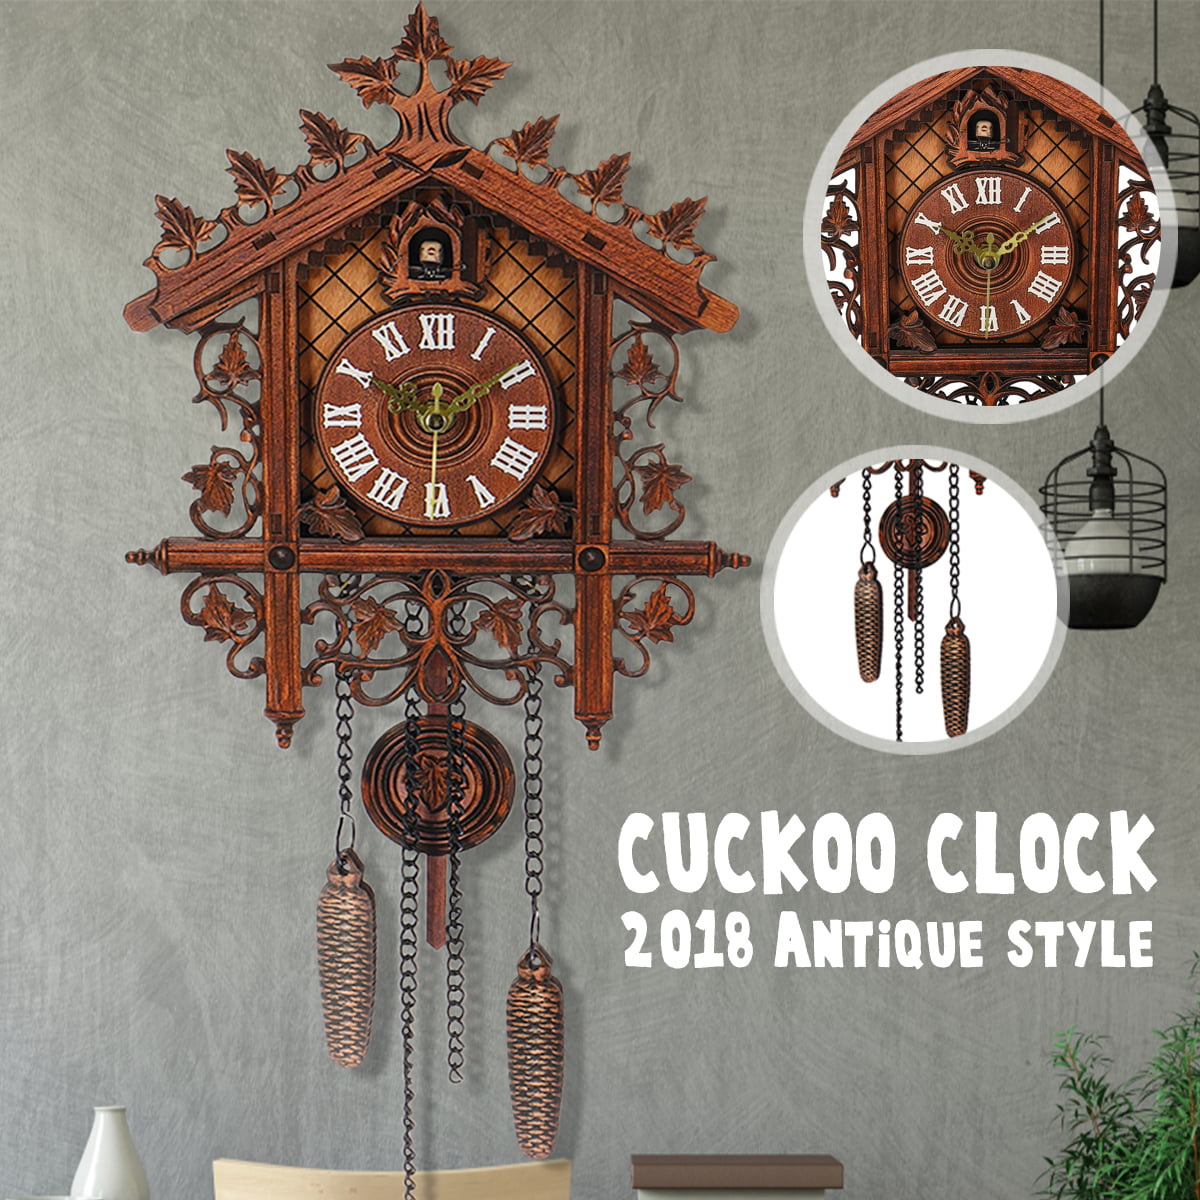 Vintage charrette cuckoo clock Tree House Swing Horloge murale Art Home Decor